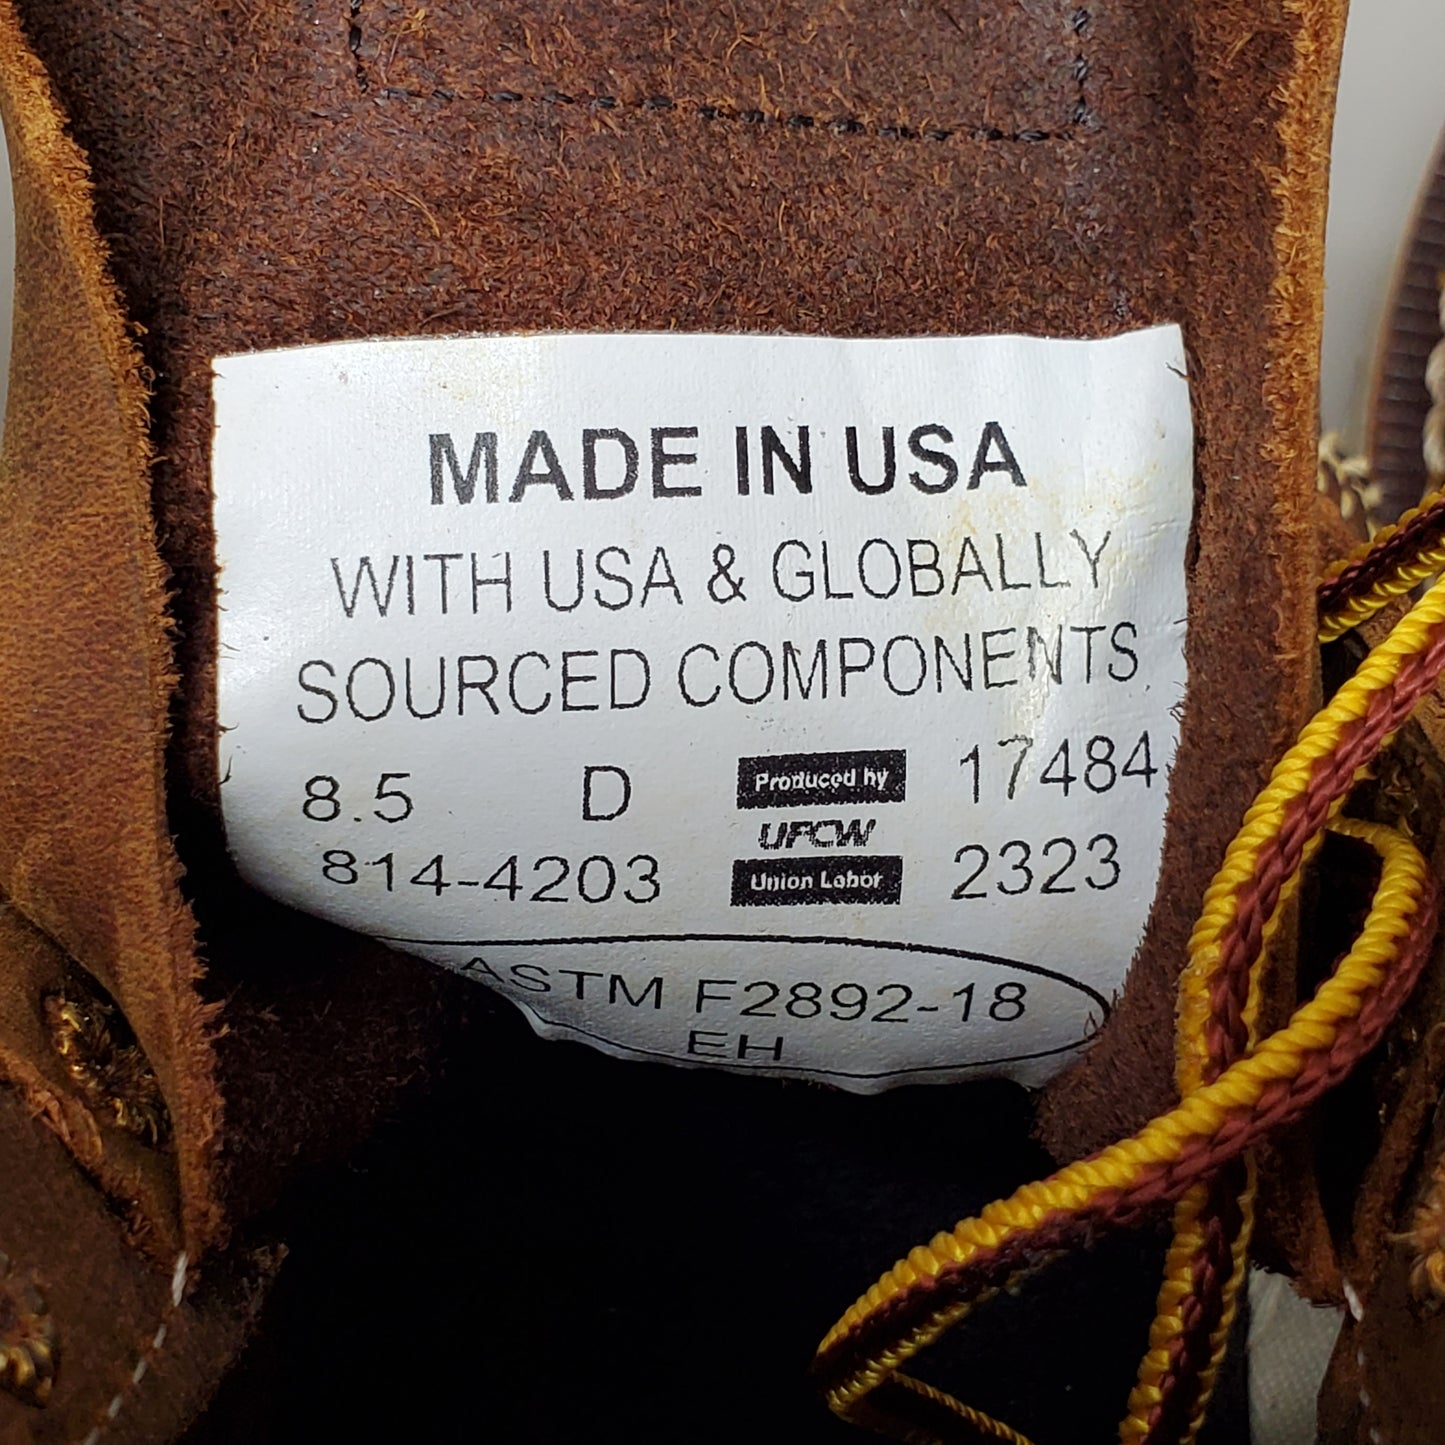 THOROGOOD American Heritage 6" Wedge Mens Soft Toe Work Boots Sz 8.5 W D 814-4203 (New)